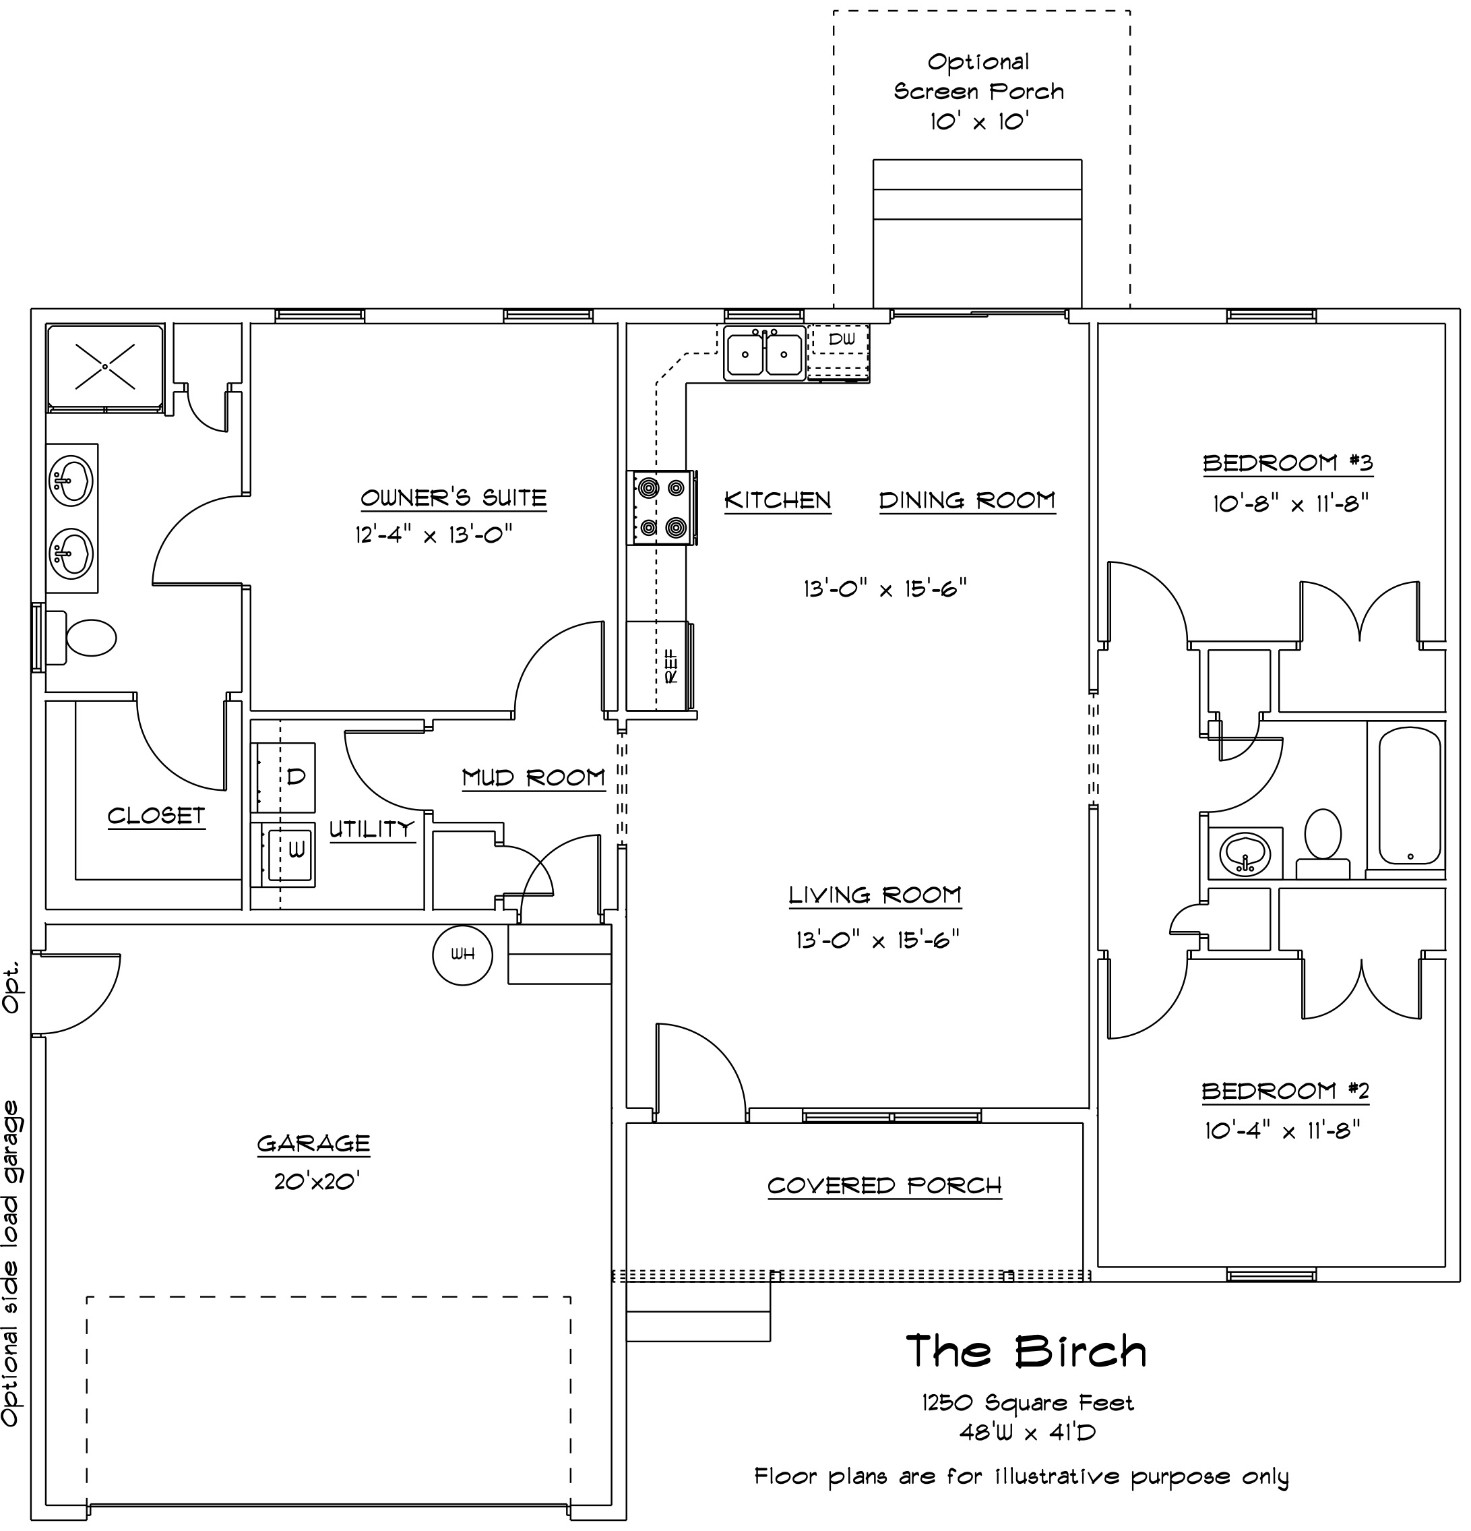 The Birch Floorplan, Seely Homes, Delaware